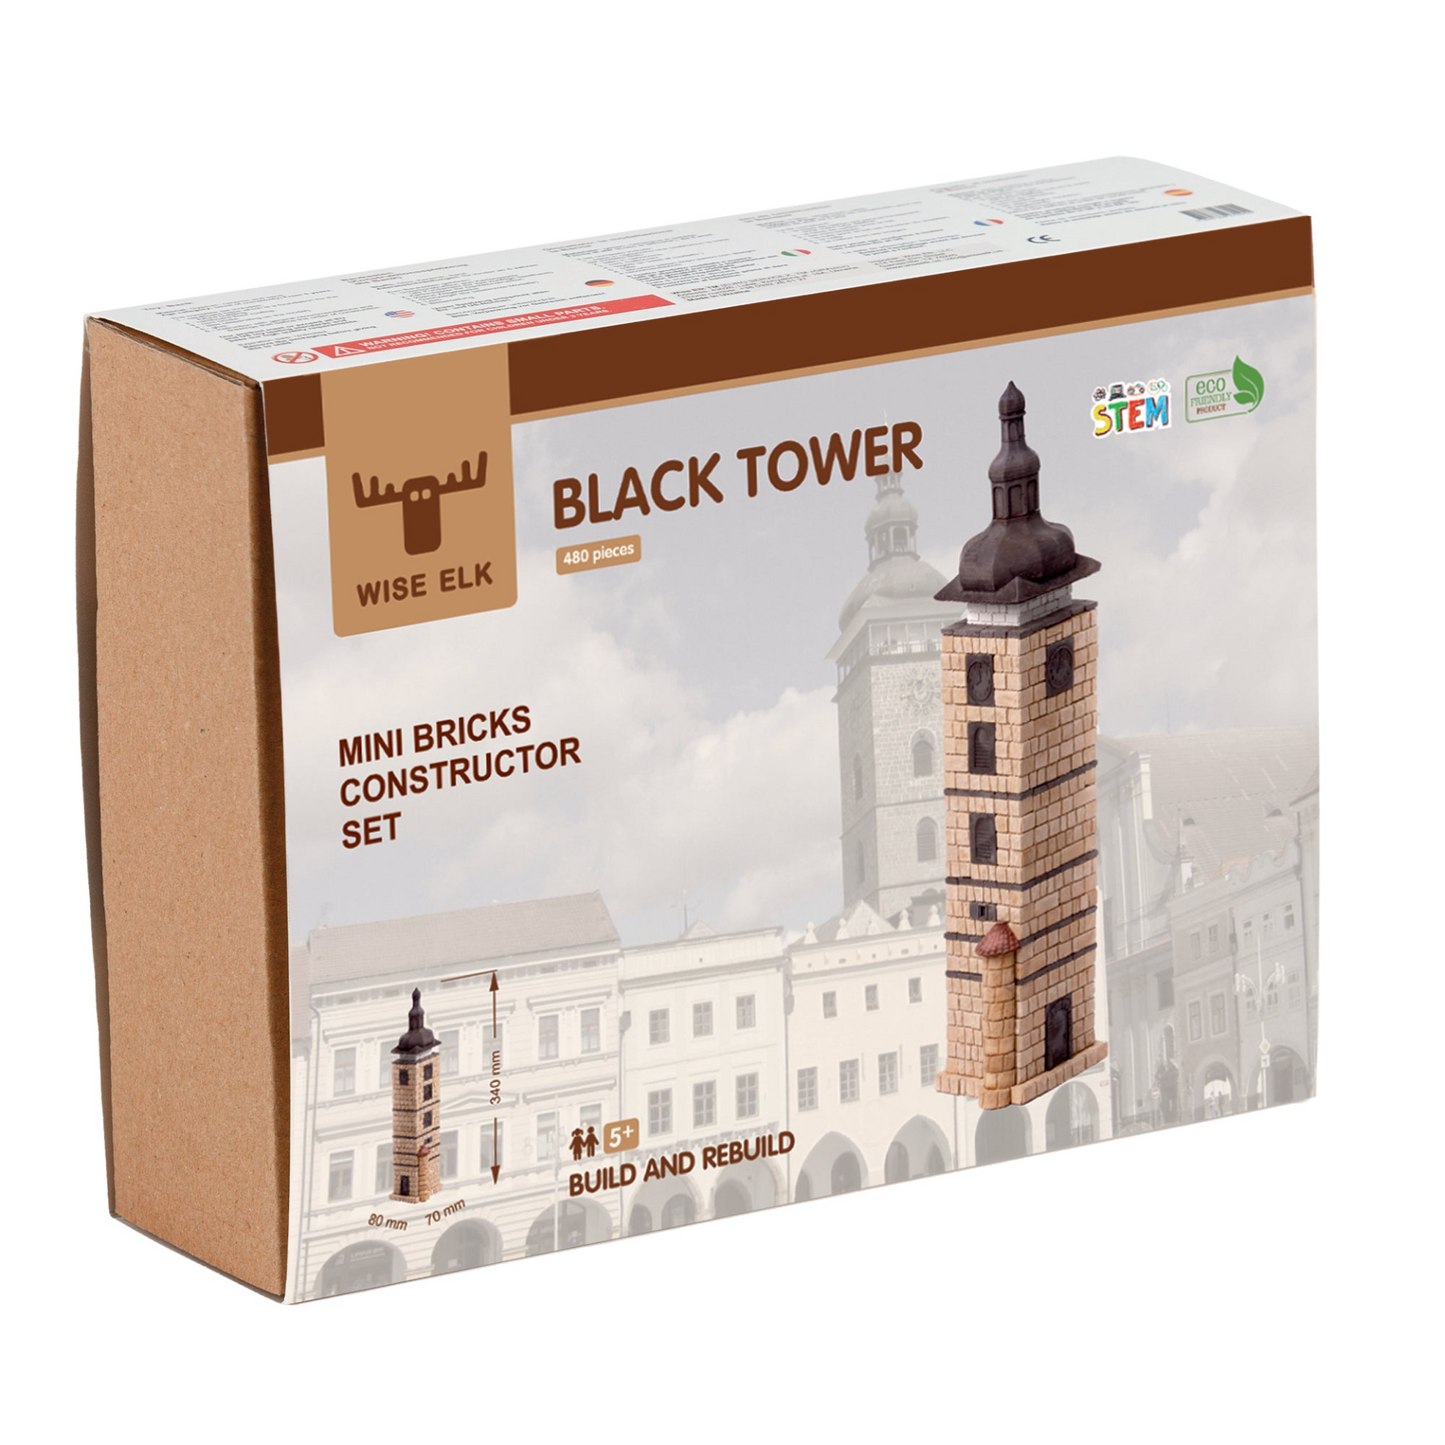 Mini Bricks Construction Set - Black Tower